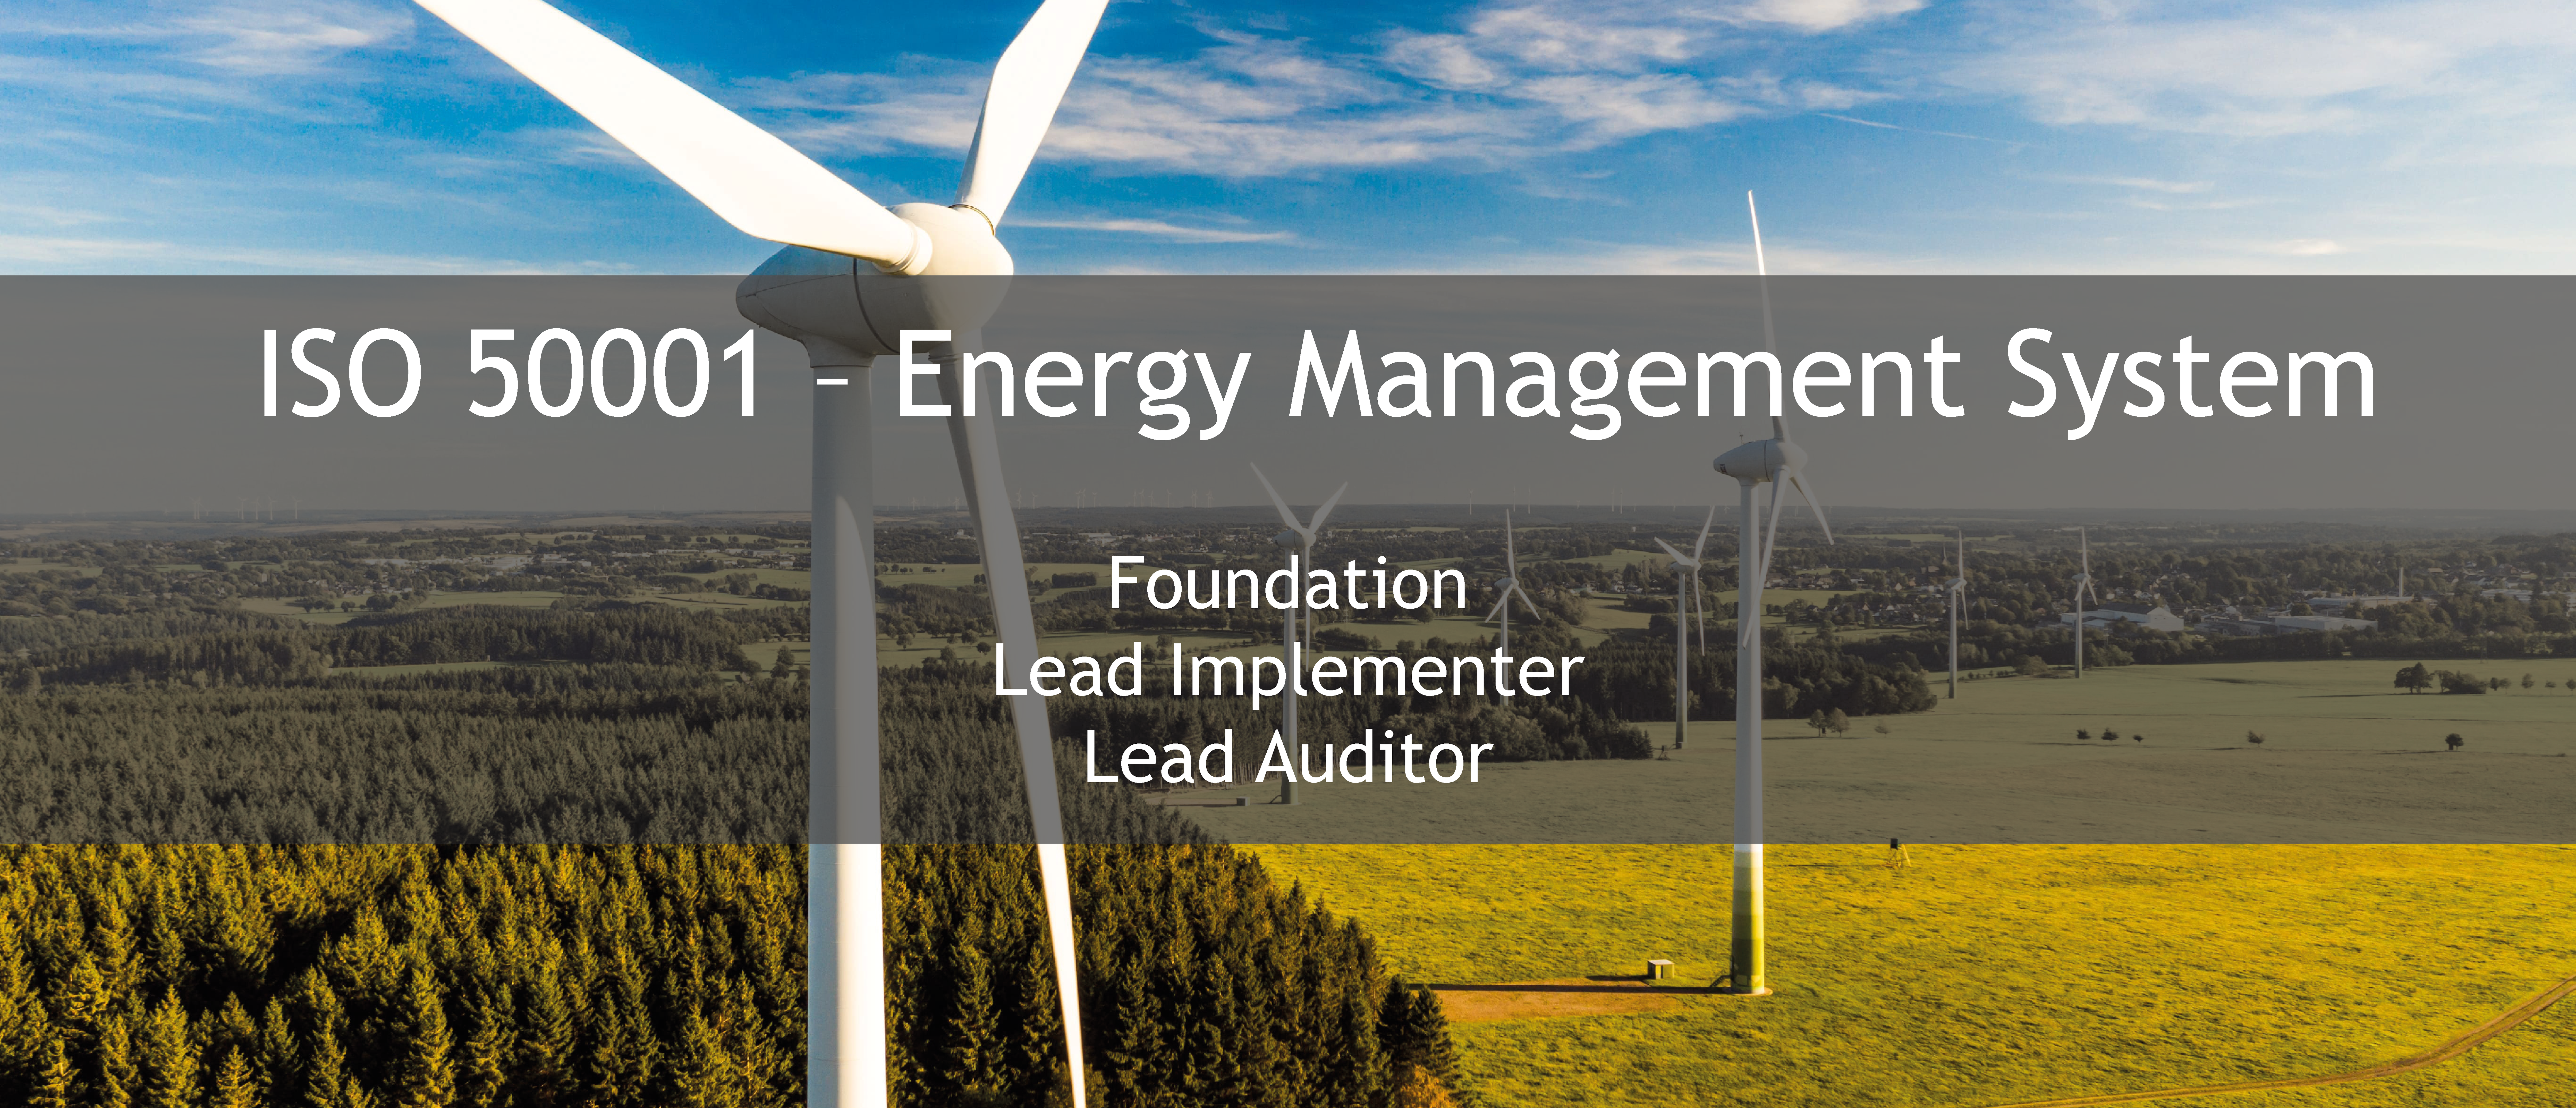 ISO 50001 training offer 1 - ISO 50001 Energy Management System